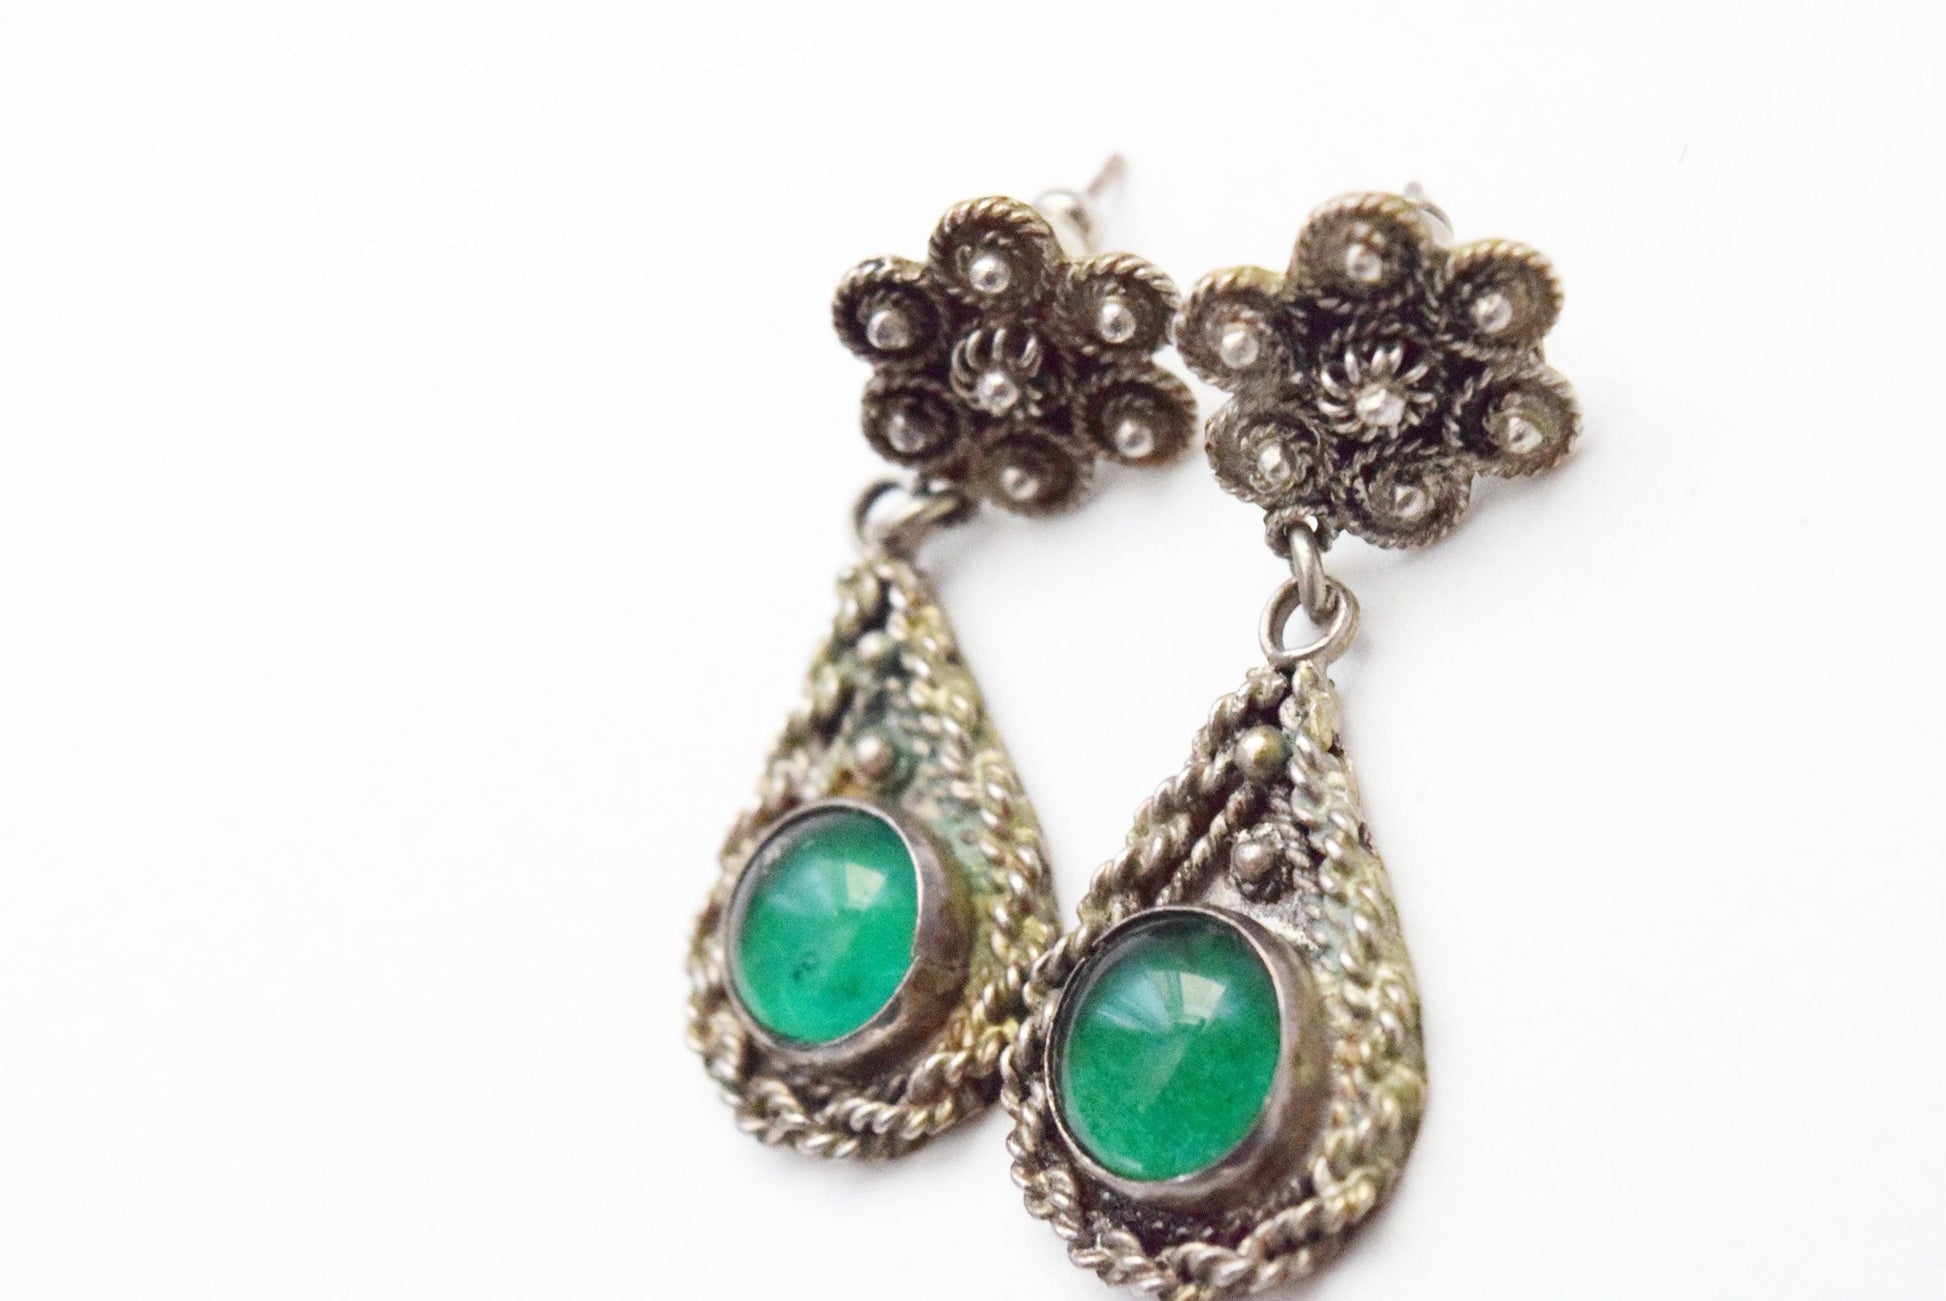 Vintage Turkish Silver Filigree Earrings with Green Cabochon - Anteeka